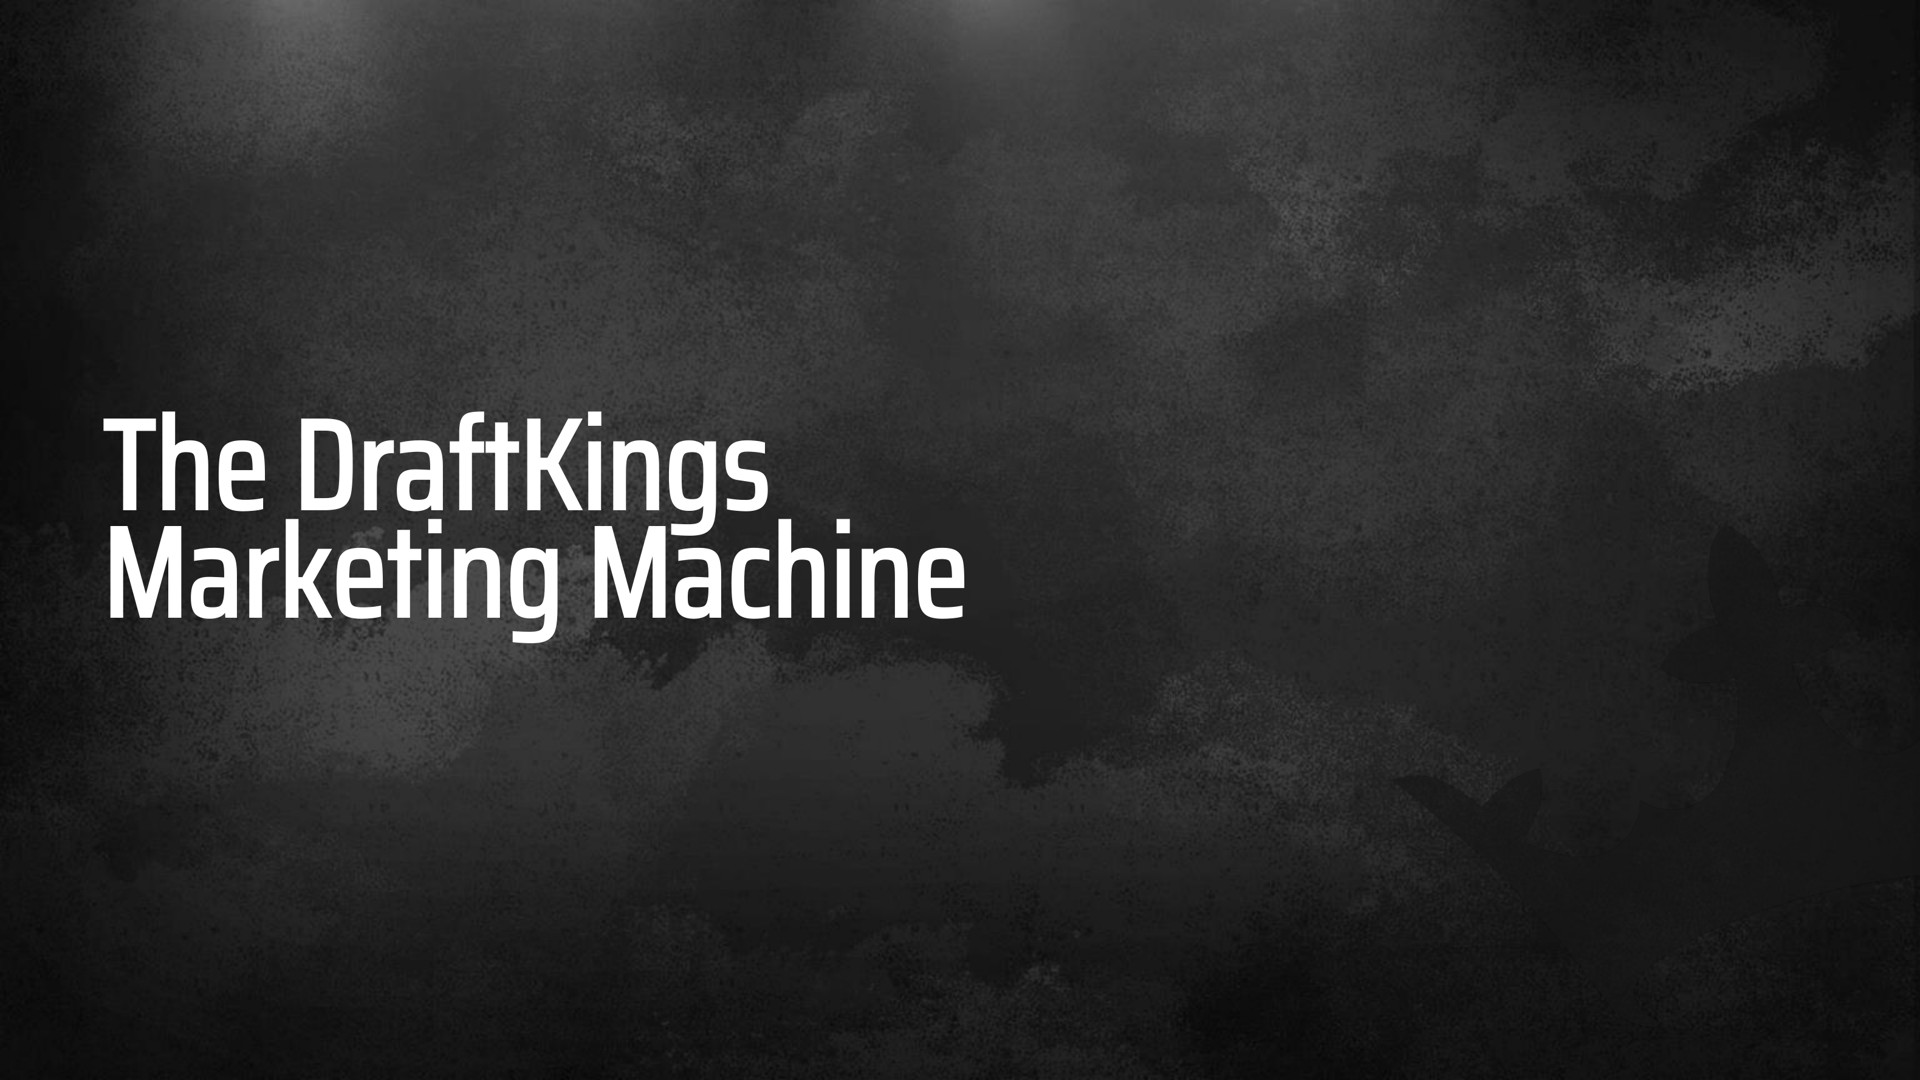 the marketing machine eaten alee | DraftKings